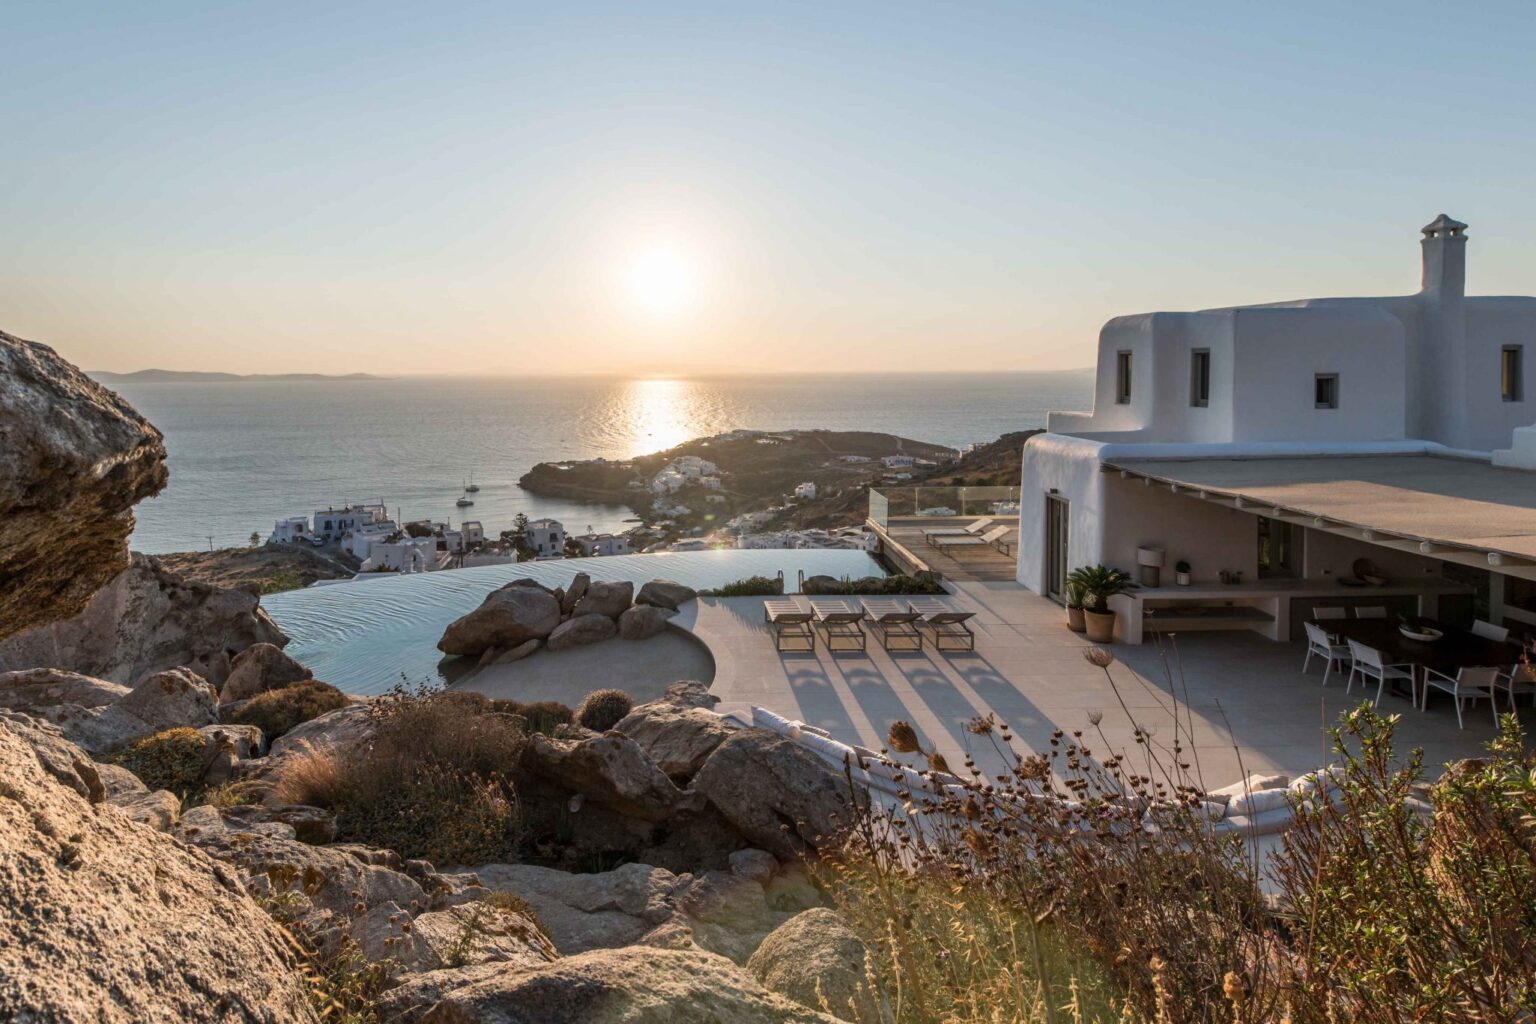 Villa Eden|||Luxury Villa Rentals in Mykonos||||||||||||||||||||||||||||||||||||||||